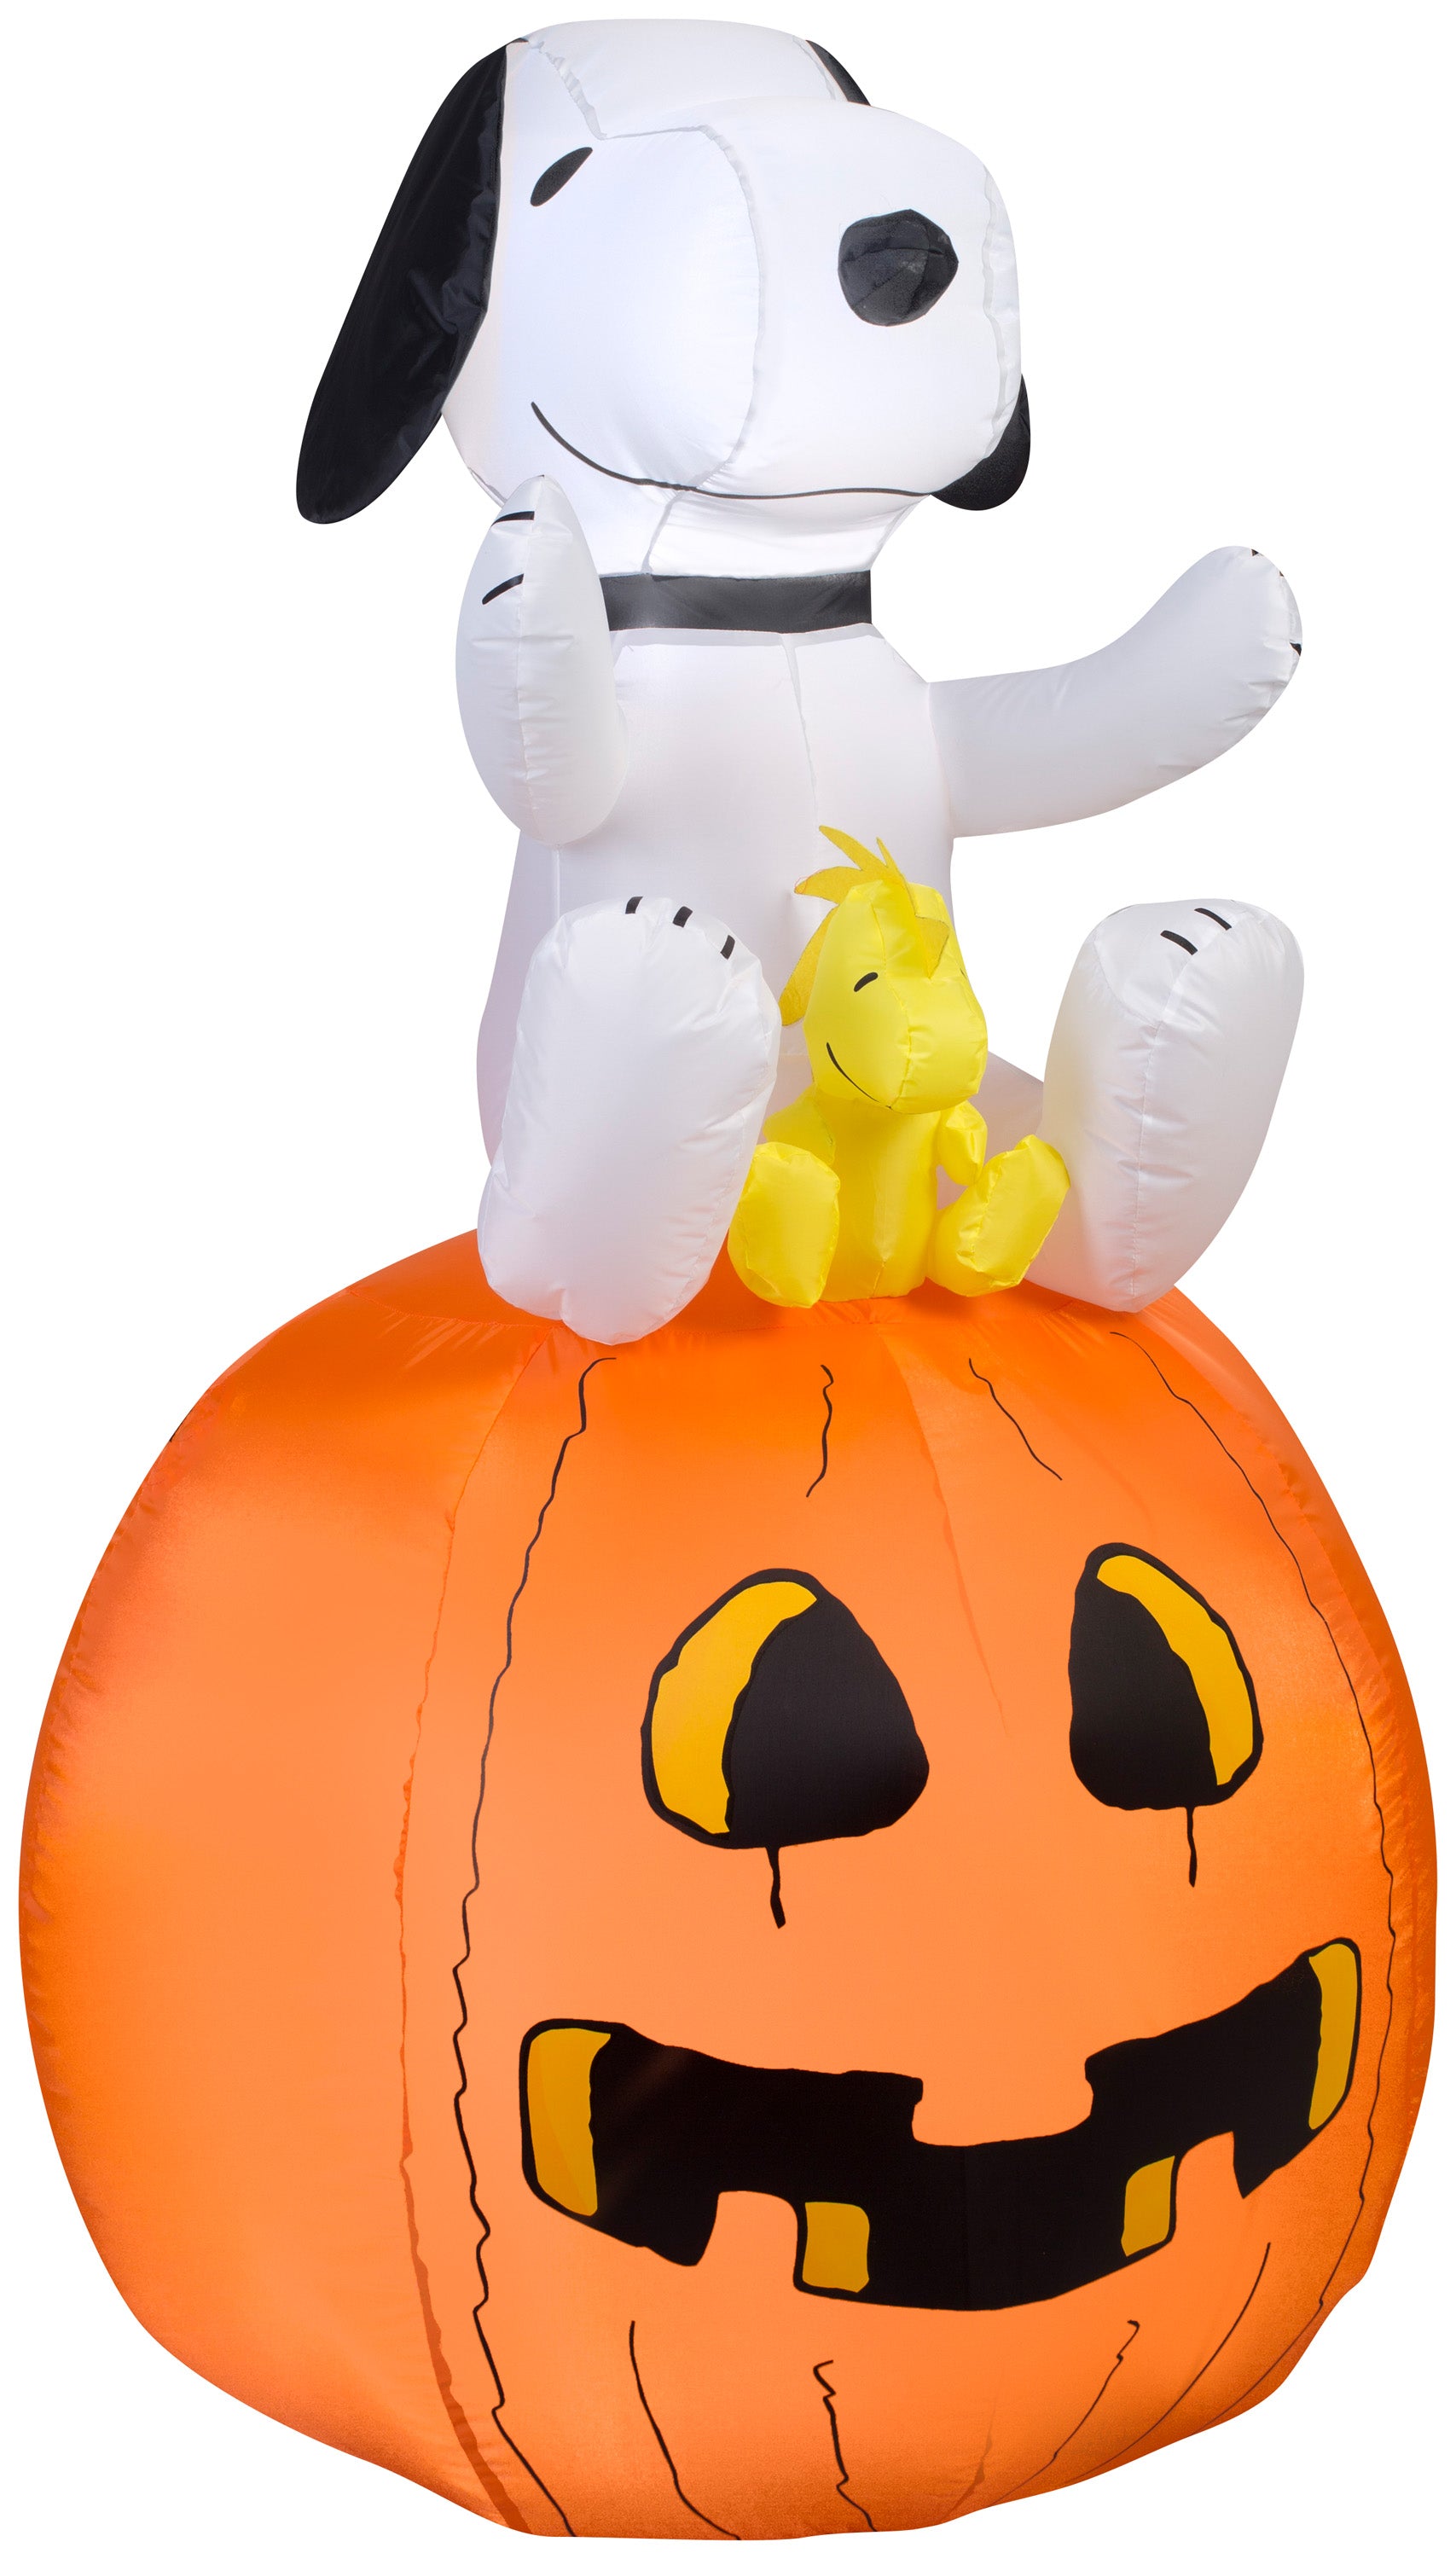 Gemmy Airblown Snoopy on Pumpkin Peanuts, 4.5 ft Tall, Multicolored